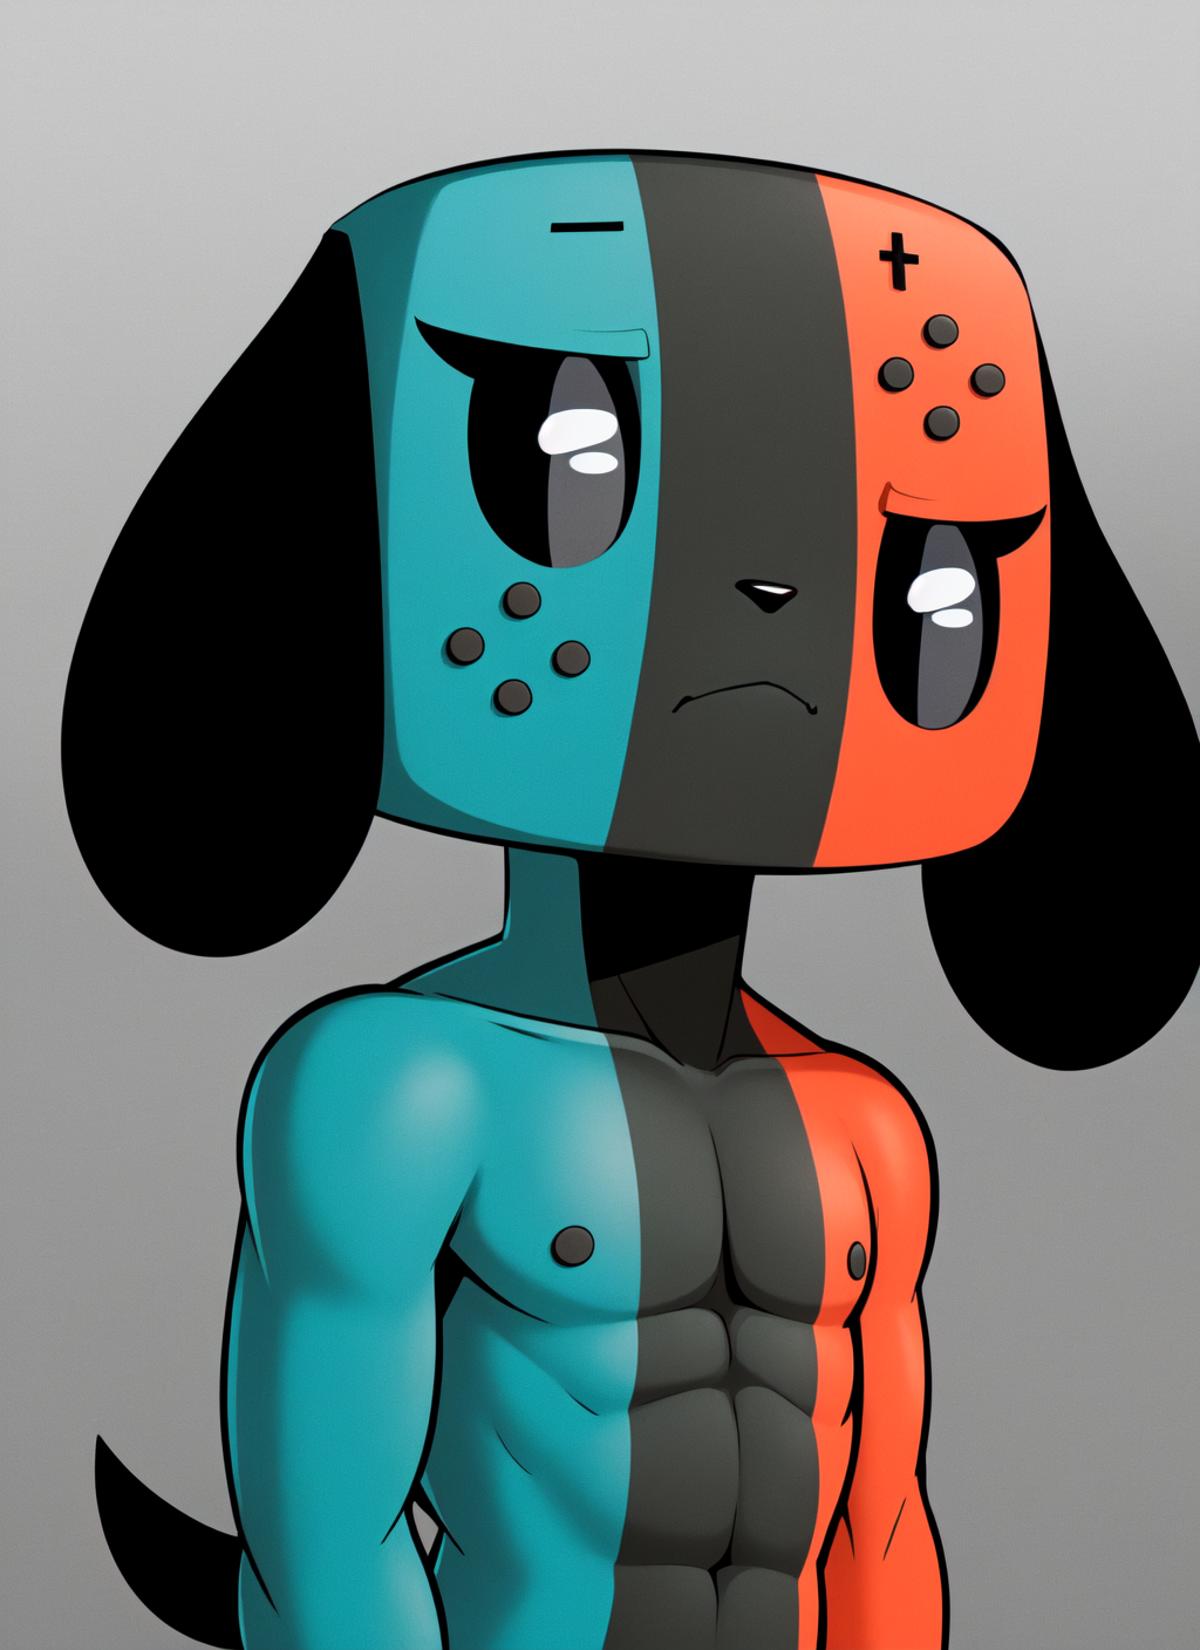 Switch Dog (Nintendo) image by FinalEclipse